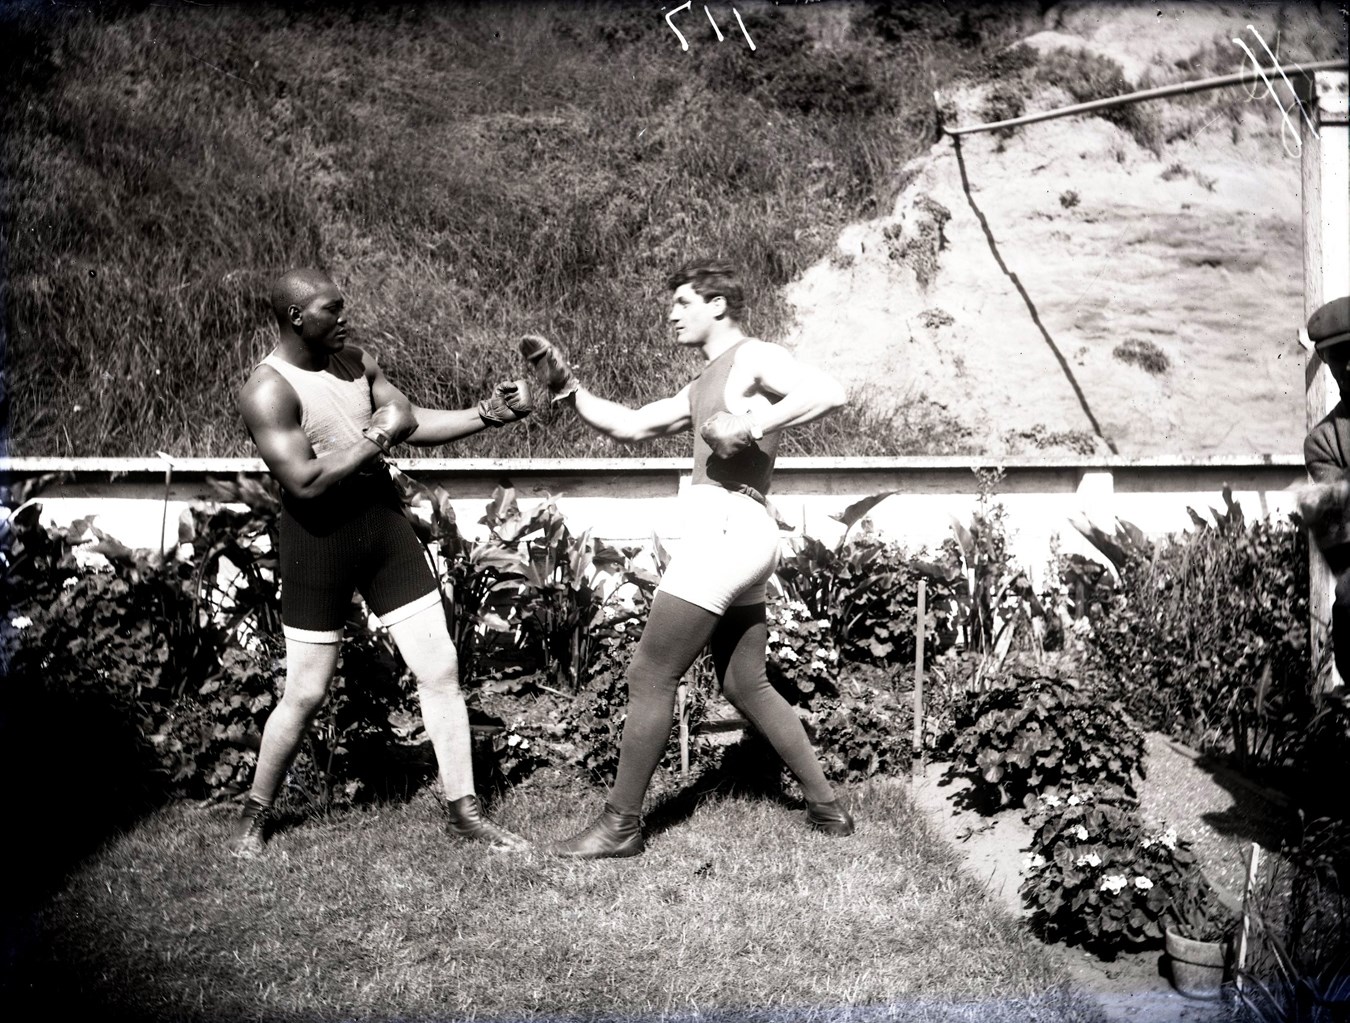 1909 Jack Johnson Spars w/Jewish Boxer Al Kaufman "Outside in Garden Setting" Type I Glass Plate Negative by Dana Studios